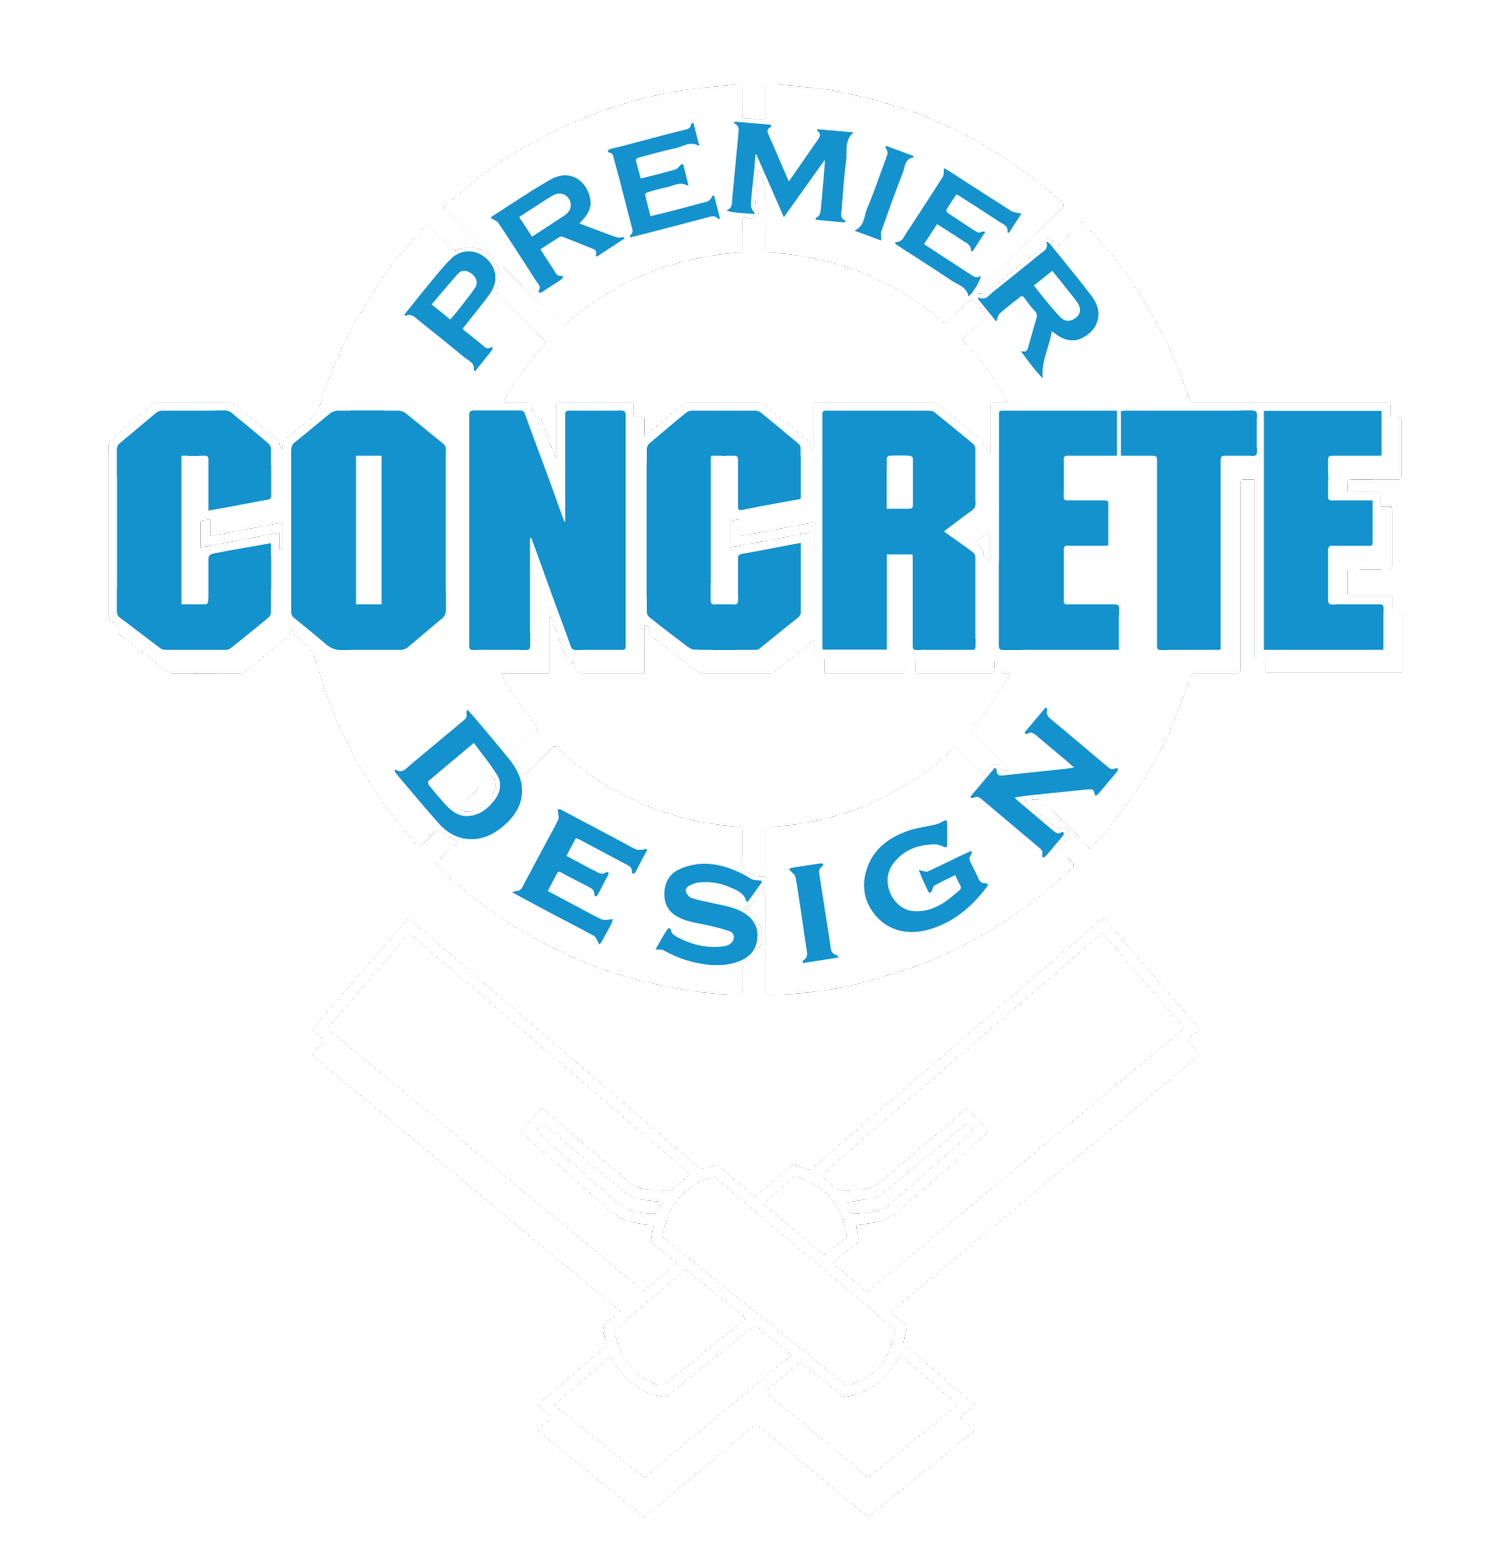 Premier Concrete Design